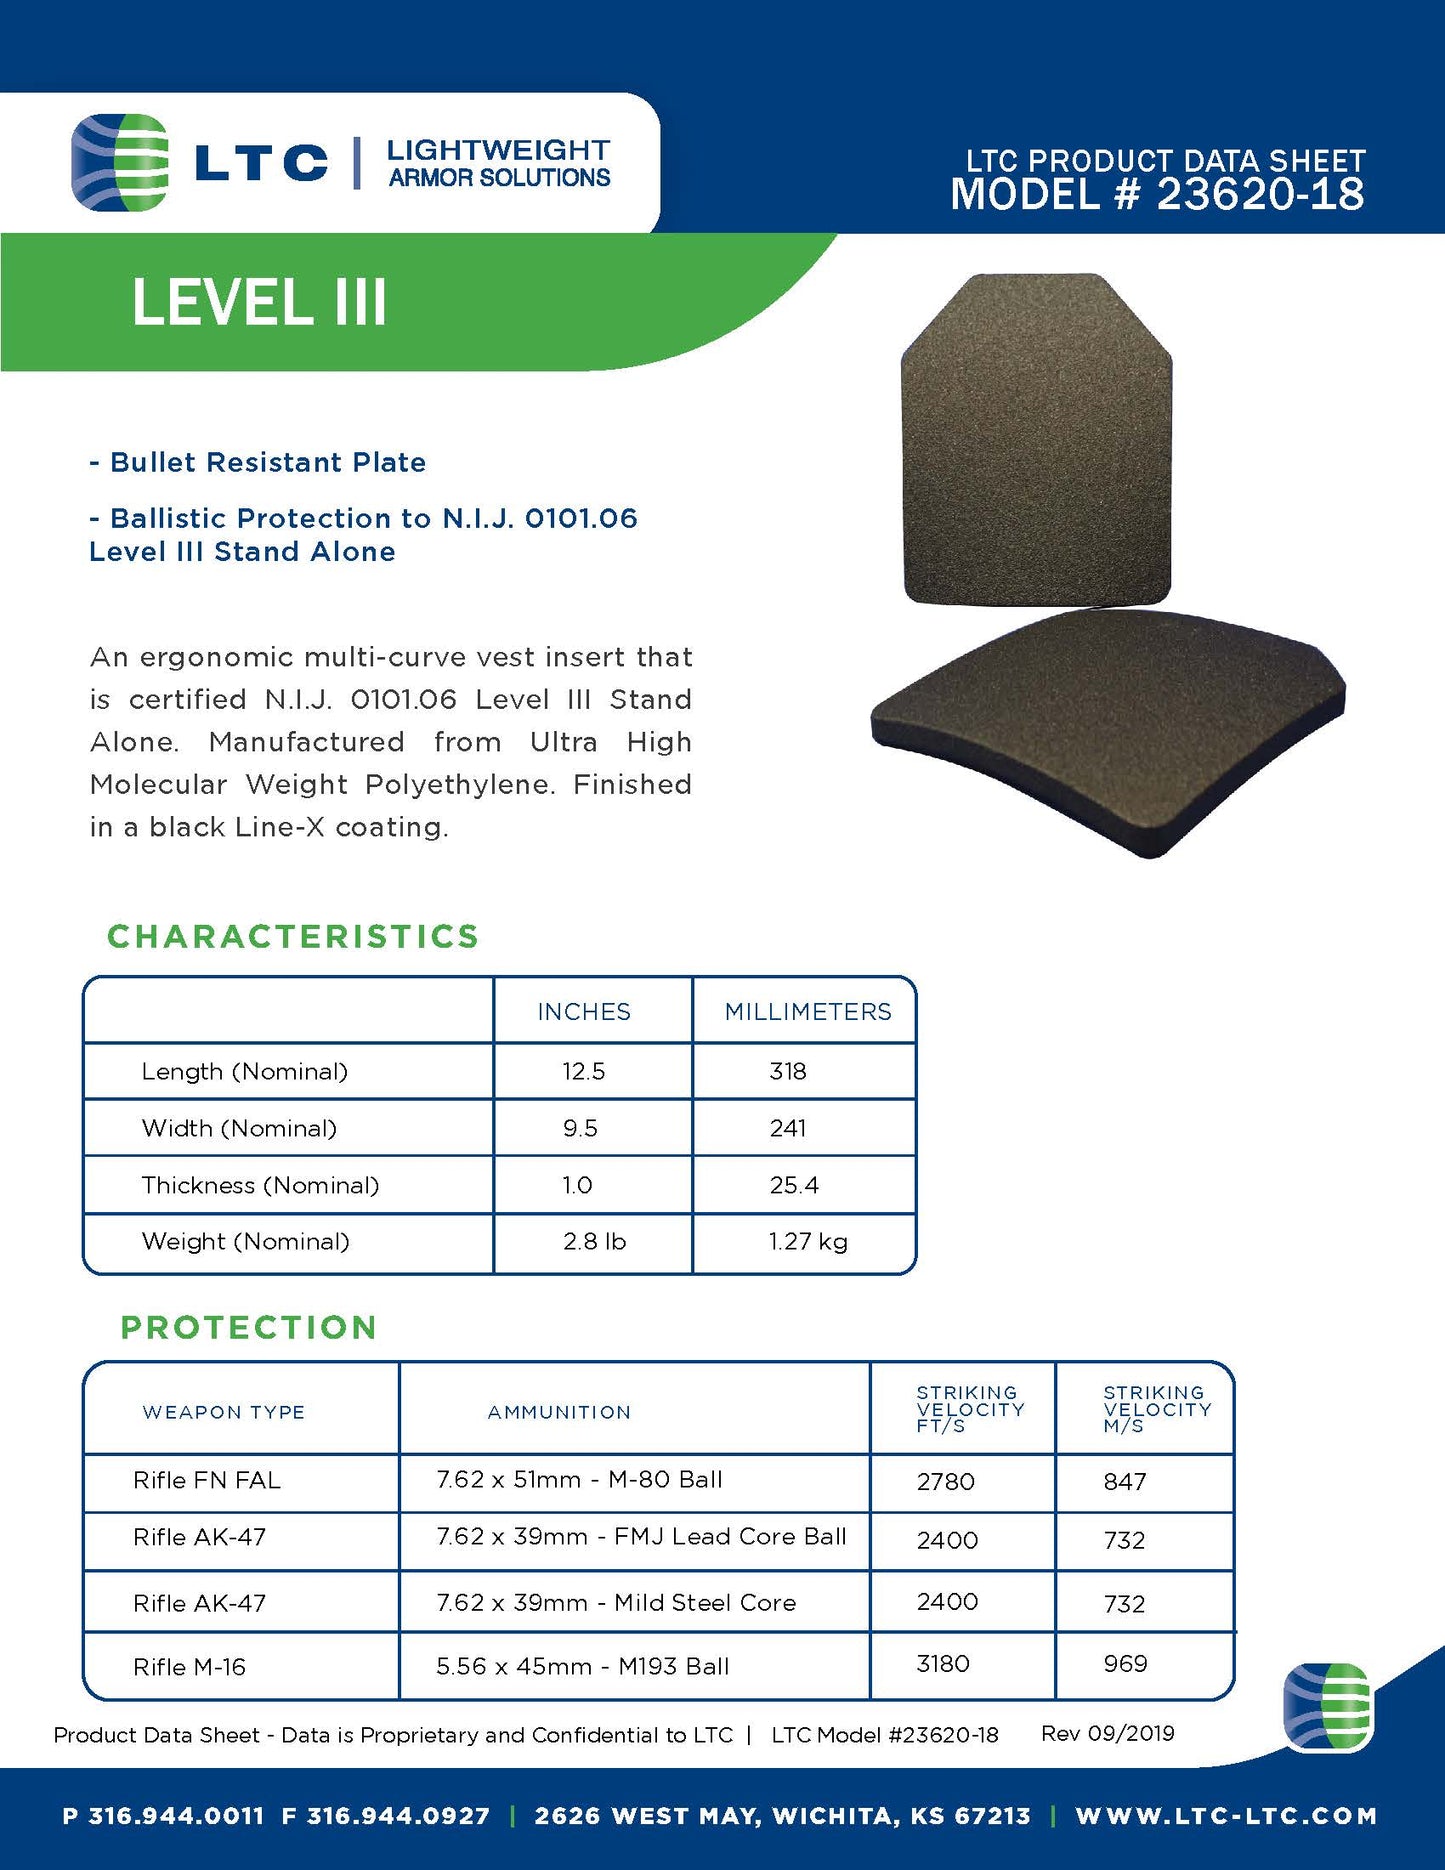 Ballistic Plate, LTC Product Data Sheet, Model 23620-18